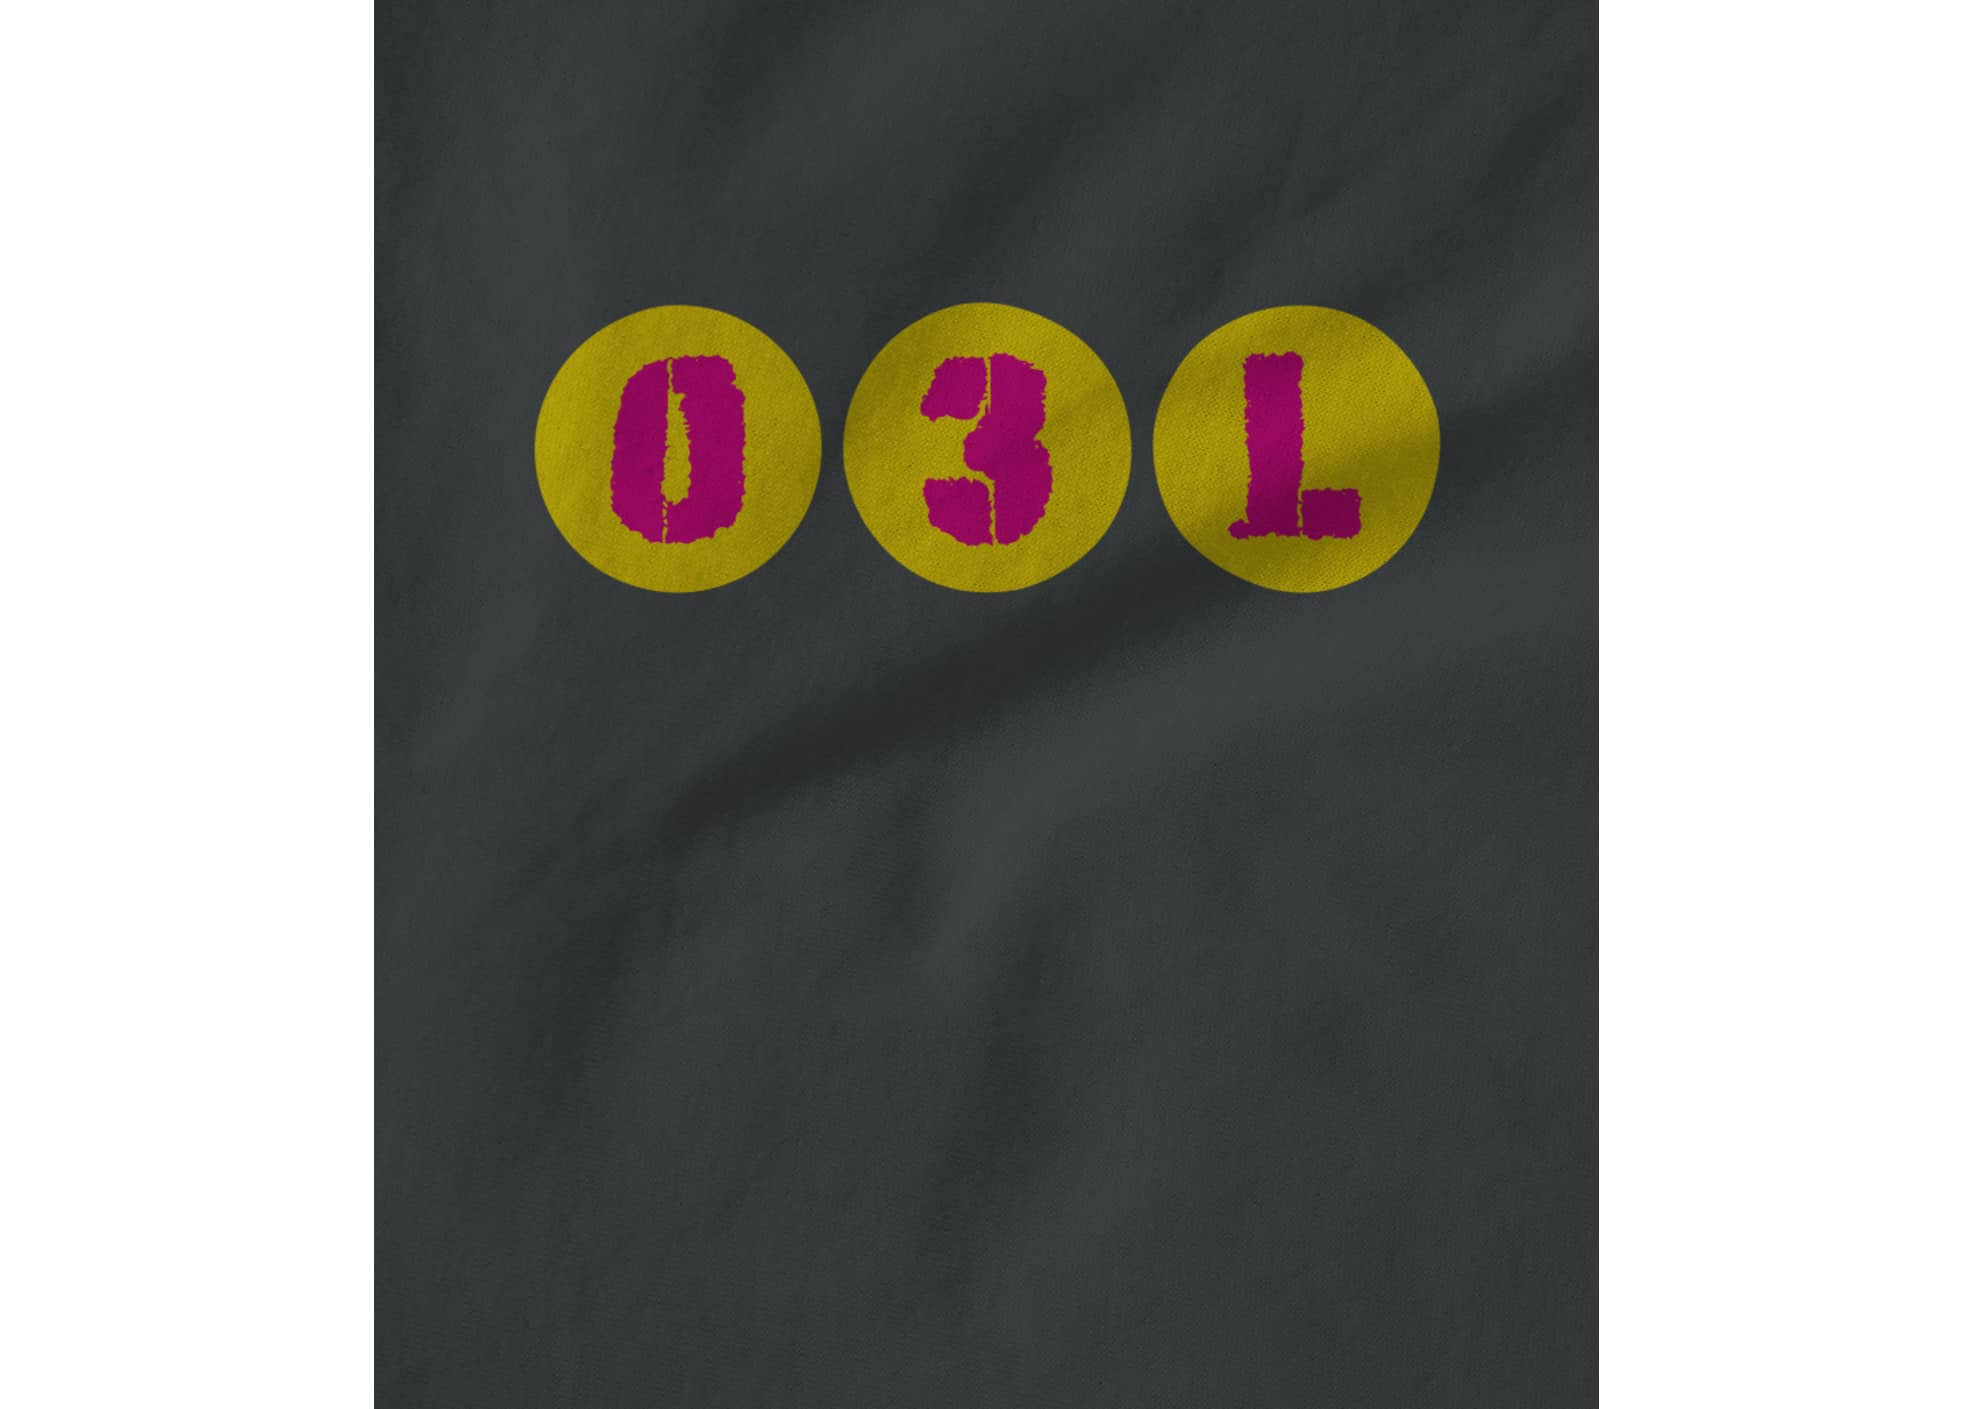 Only three lads o3l podcast   logo design 2  asphalt  1579509236